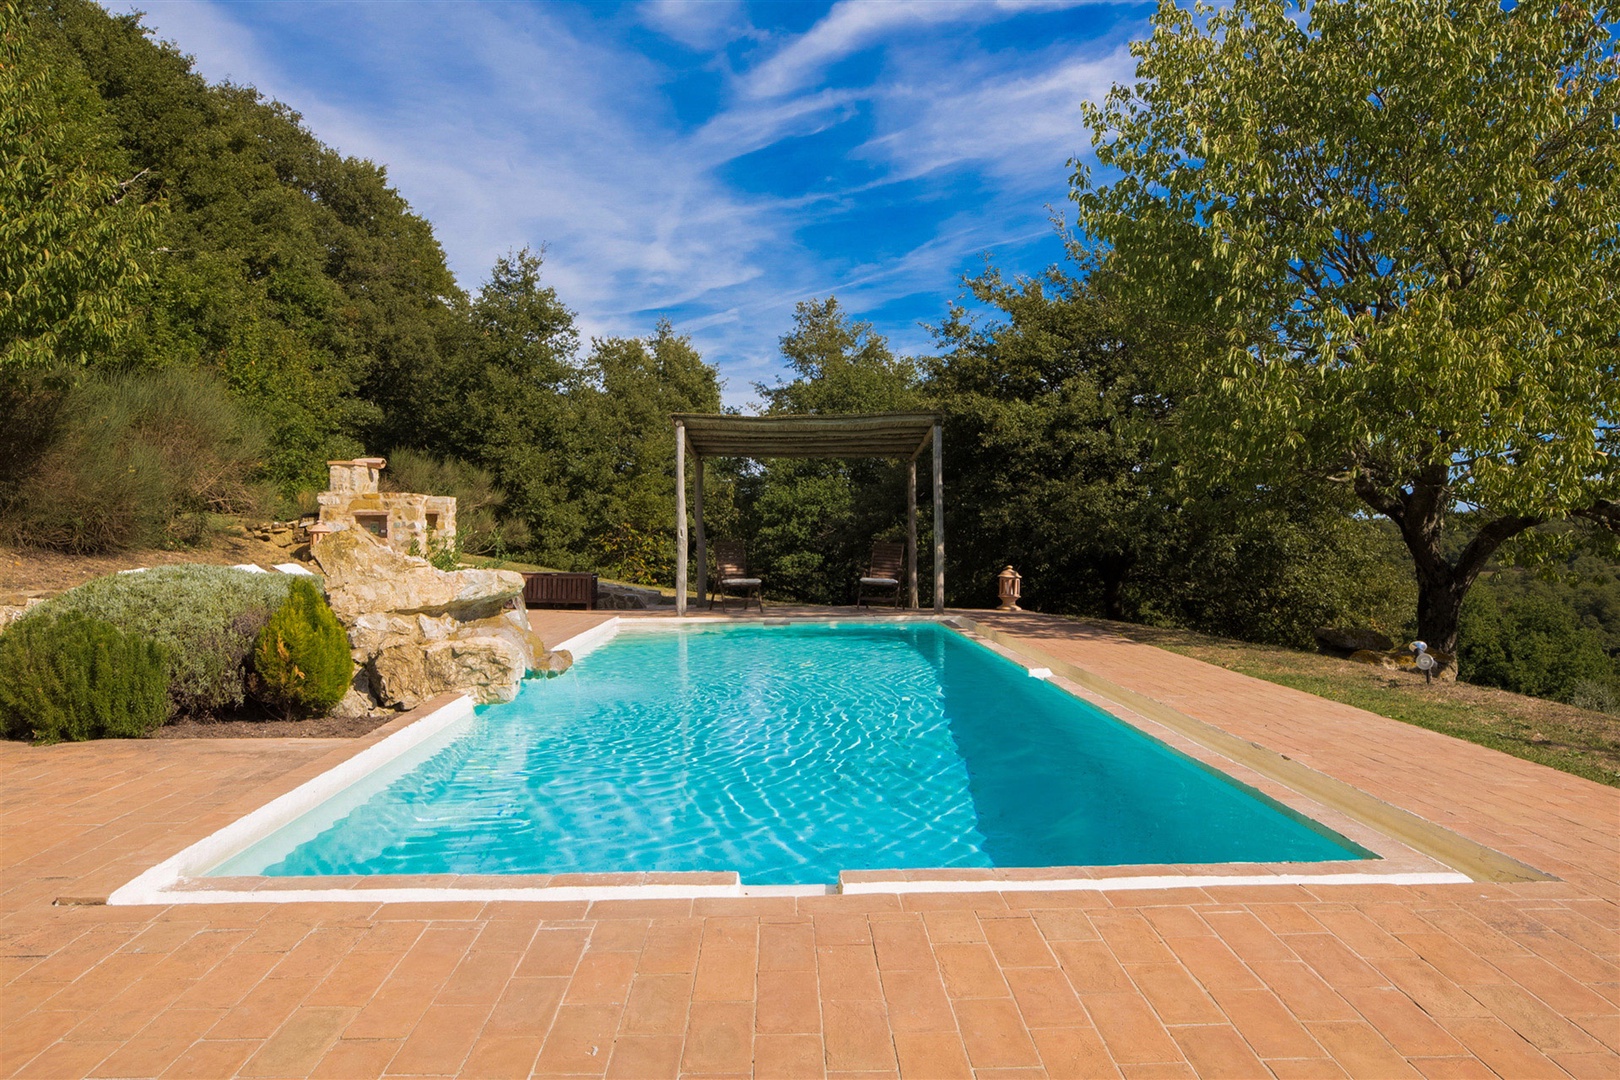 Soak up the Tuscan sun around the large swimming pool.